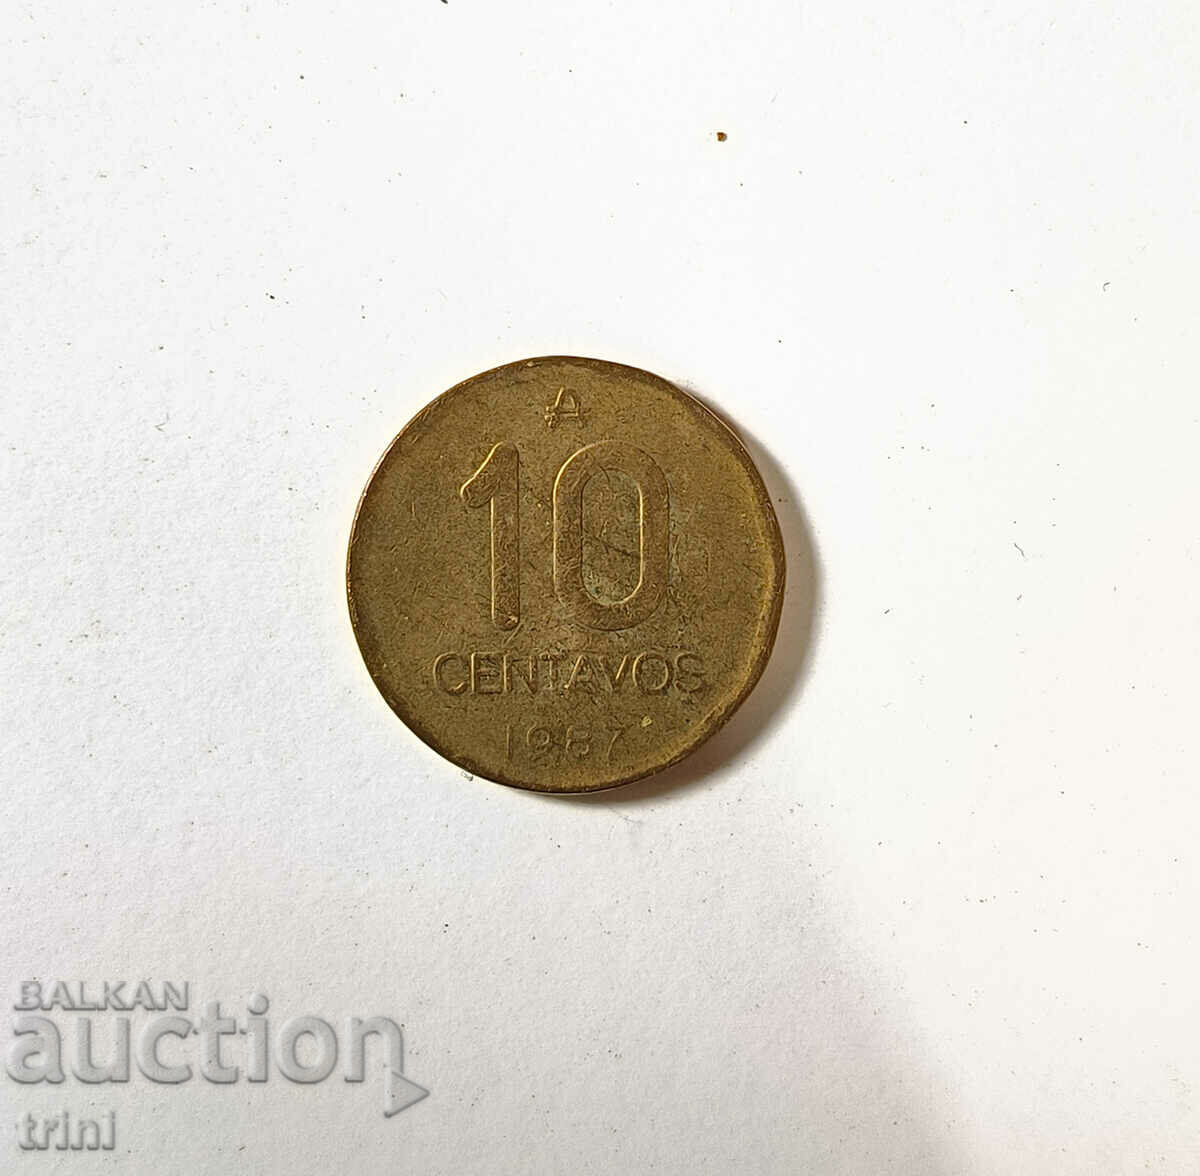 Argentina 10 centavos 1987 an s40